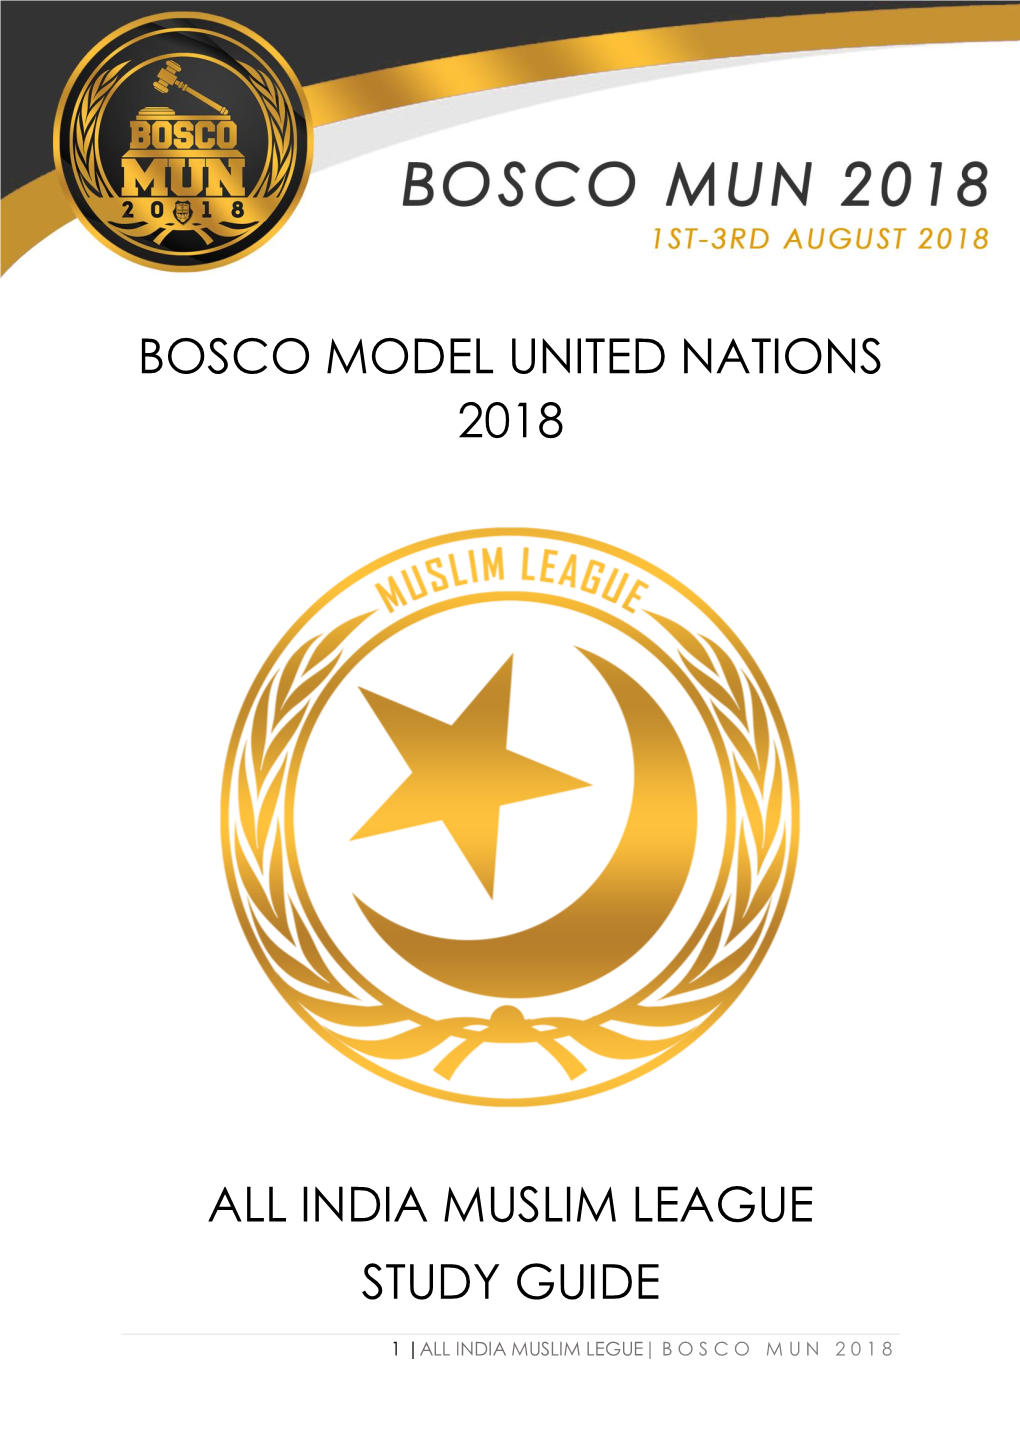 Bosco Model United Nations 2018 All India Muslim League